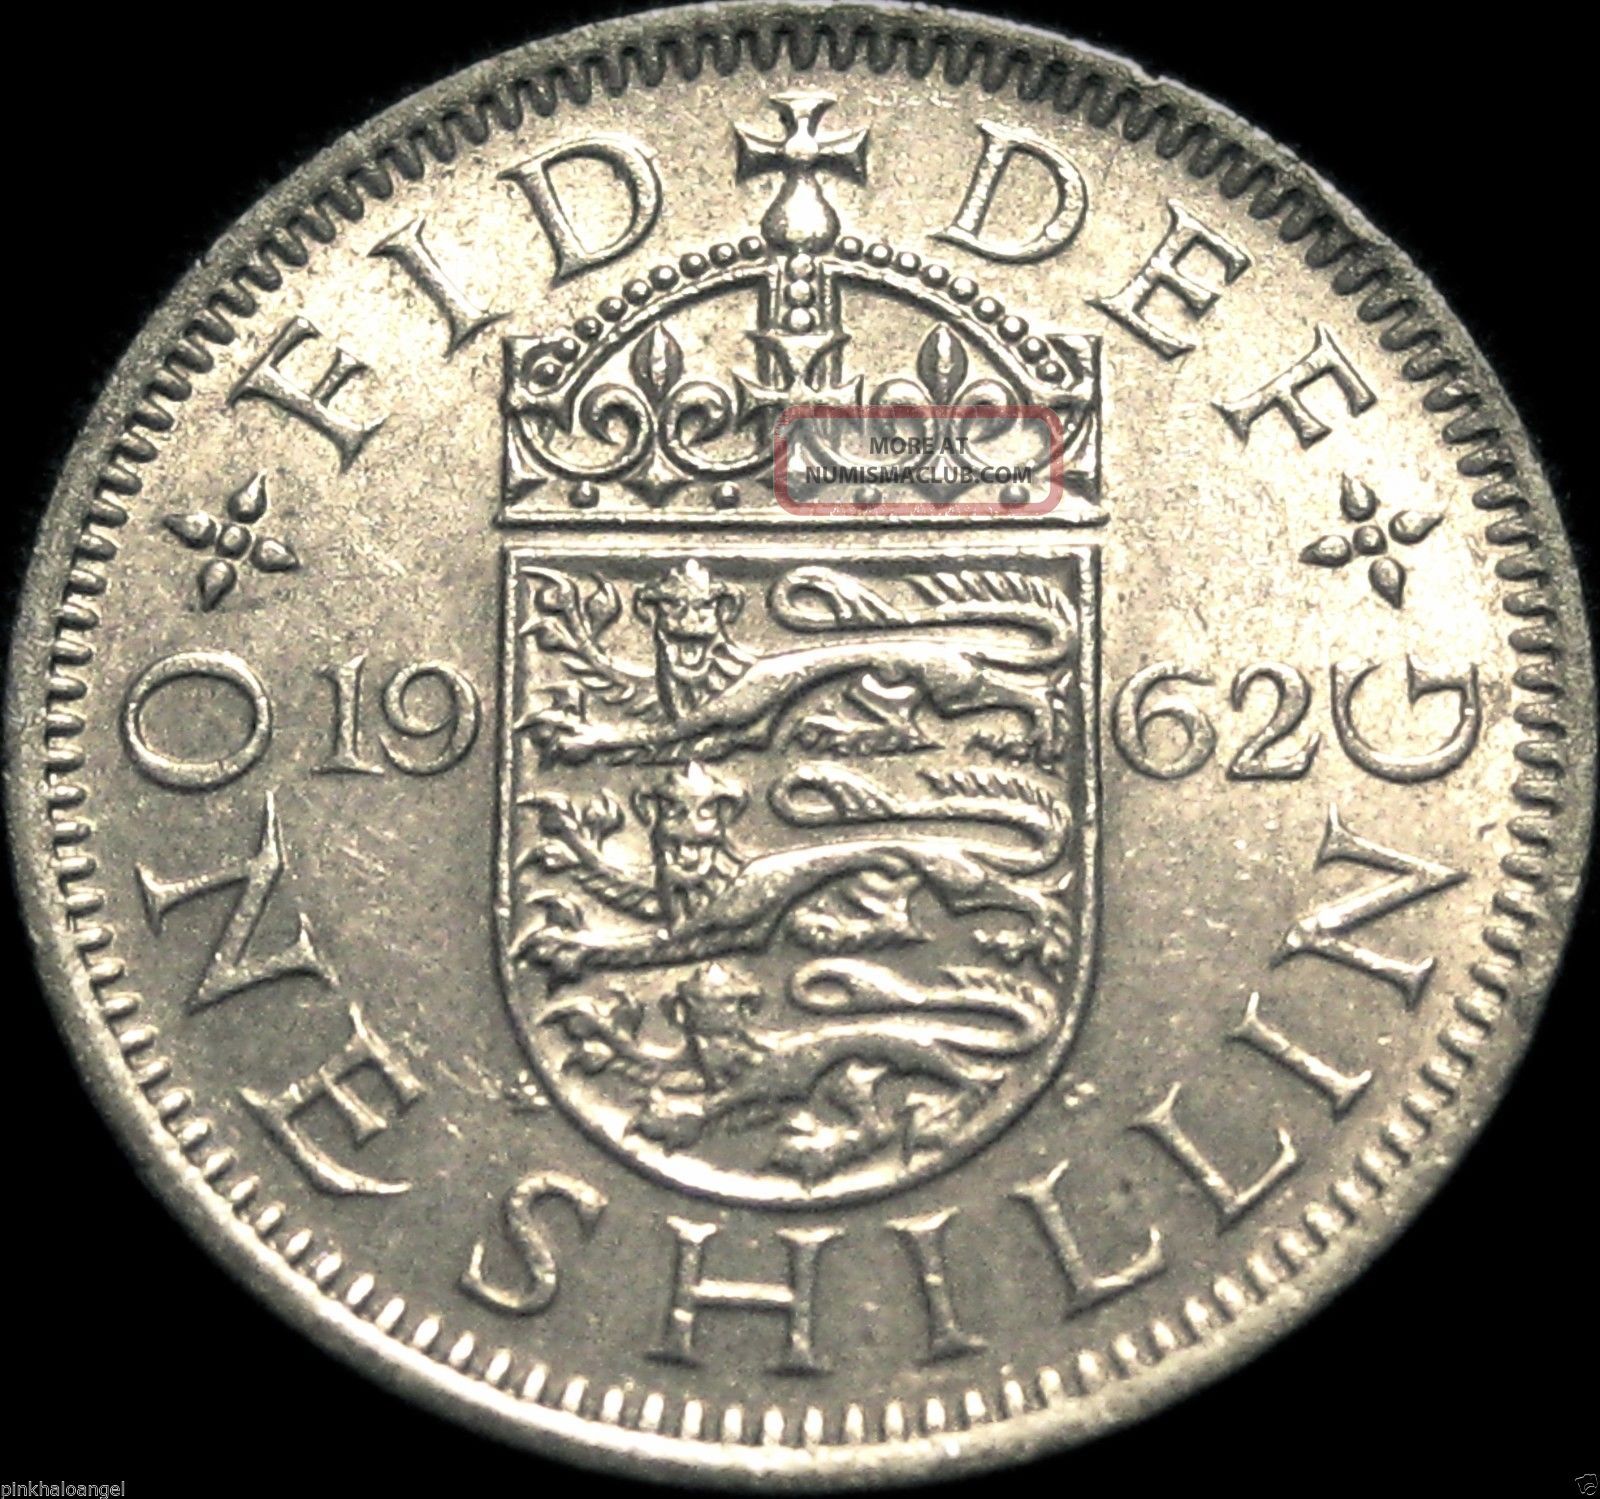 Uk - Great Britain - British 1962 Shilling Coin - Great Coin - Elizabeth Ii